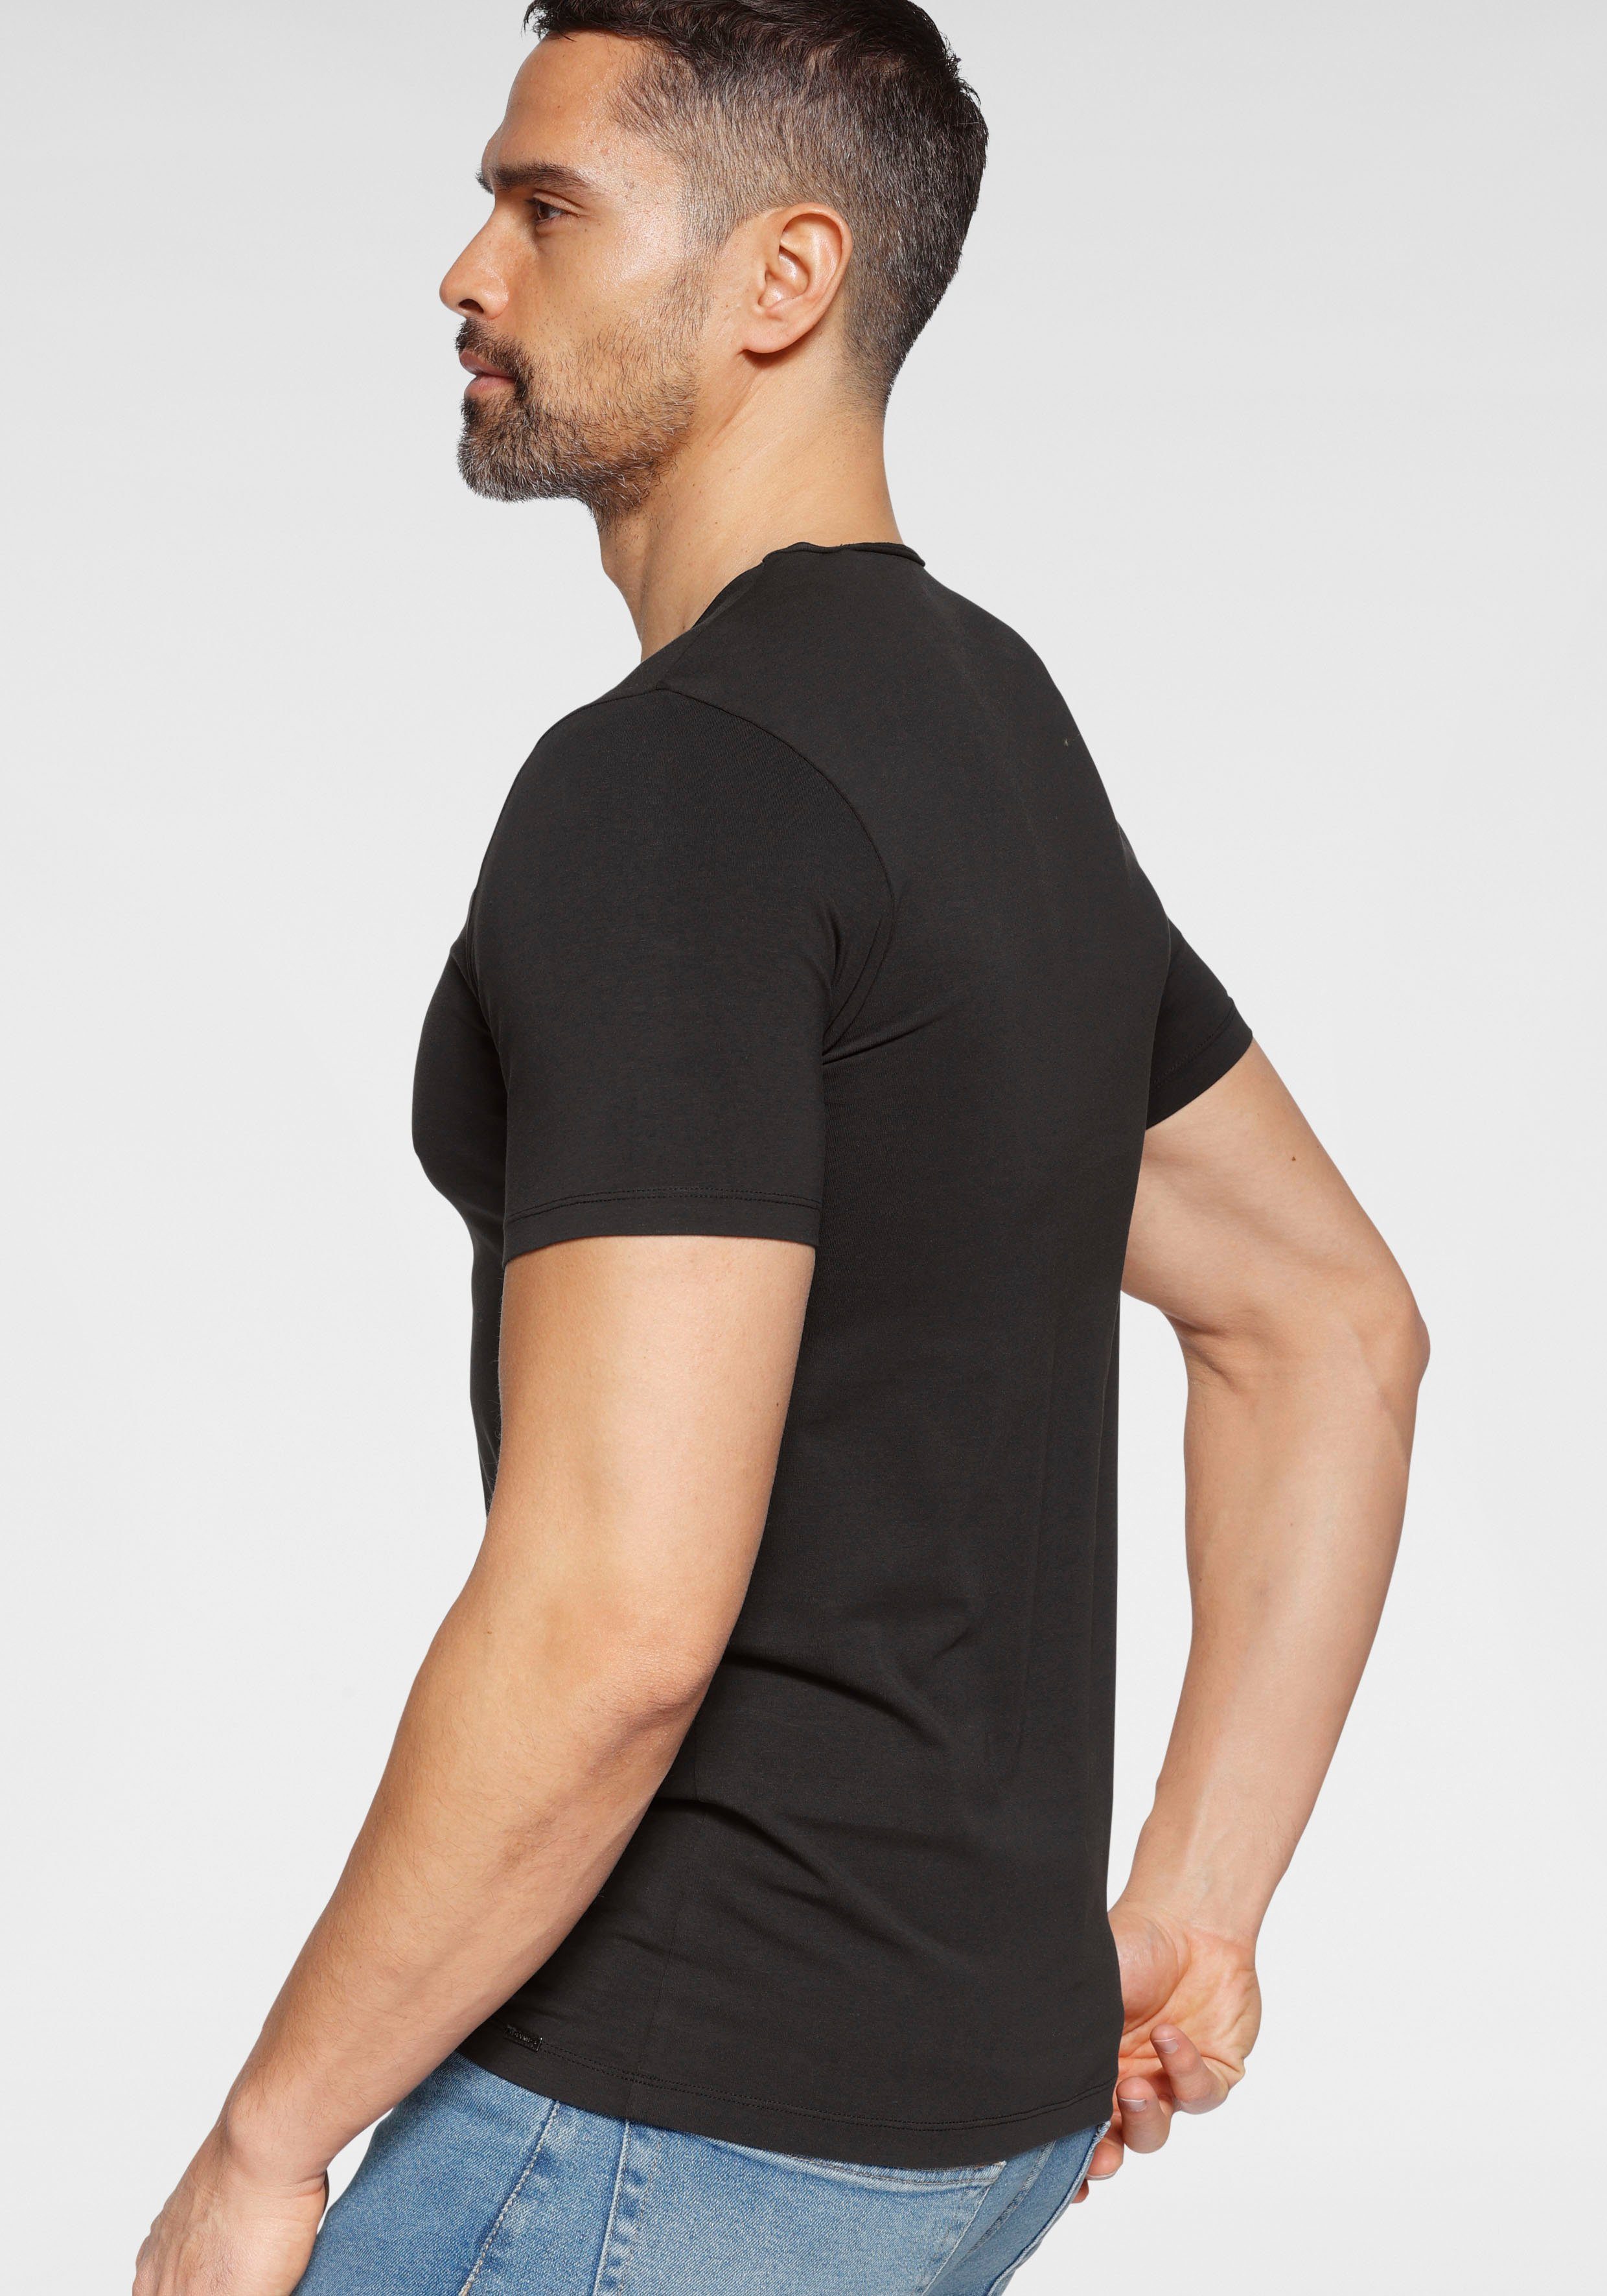 Jersey T-Shirt Five fit OLYMP Level aus schwarz body feinem